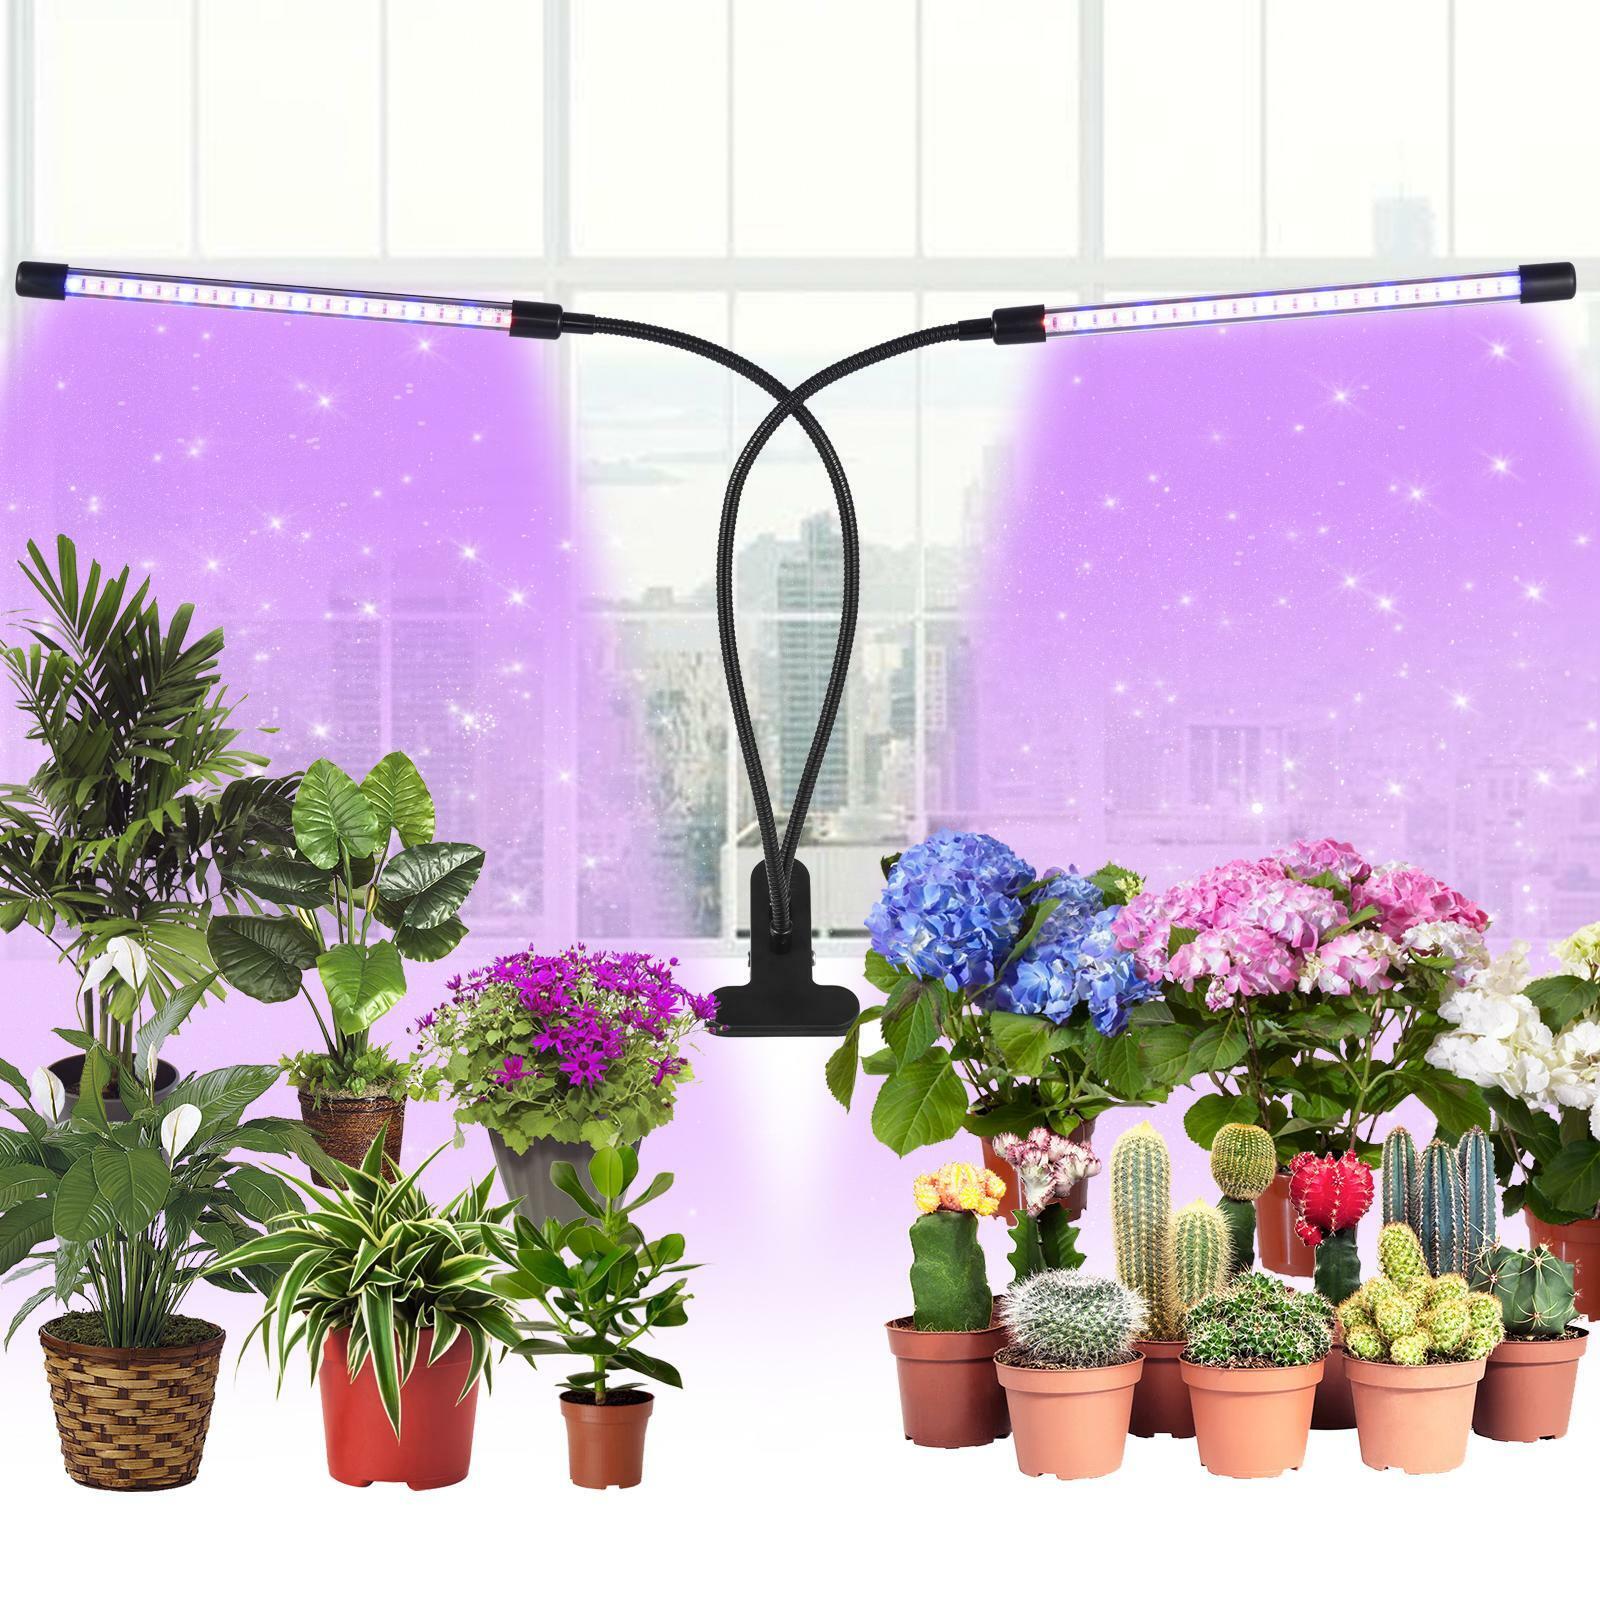 4 Heads LED Grow Lights Indoor Plants Full Spectrum Plant Growing Lamp Light US